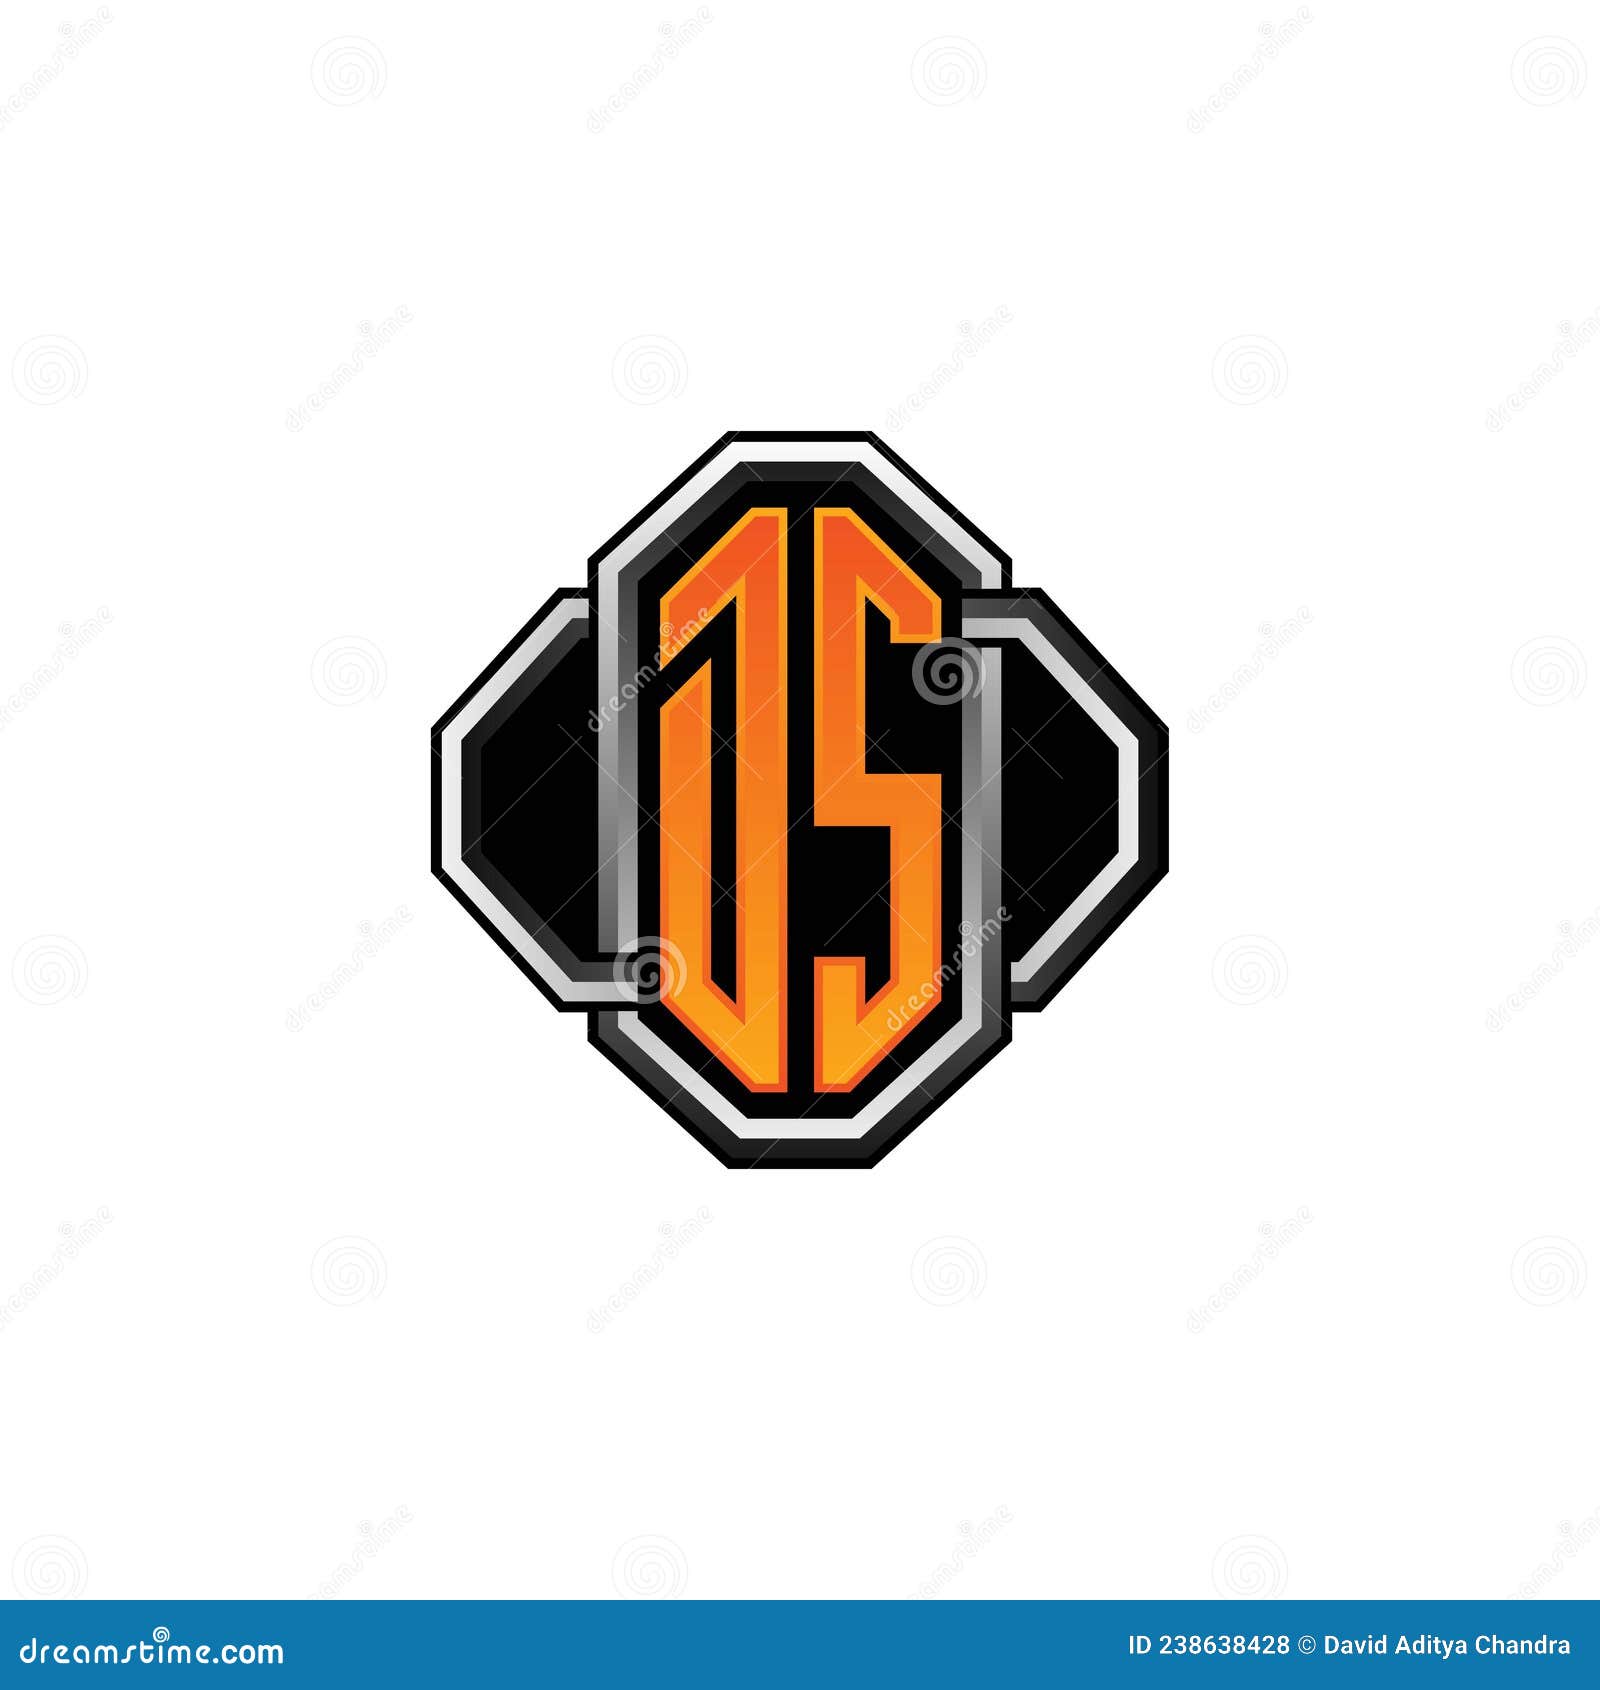 Initial letter shape s slash logo sign symbol icon